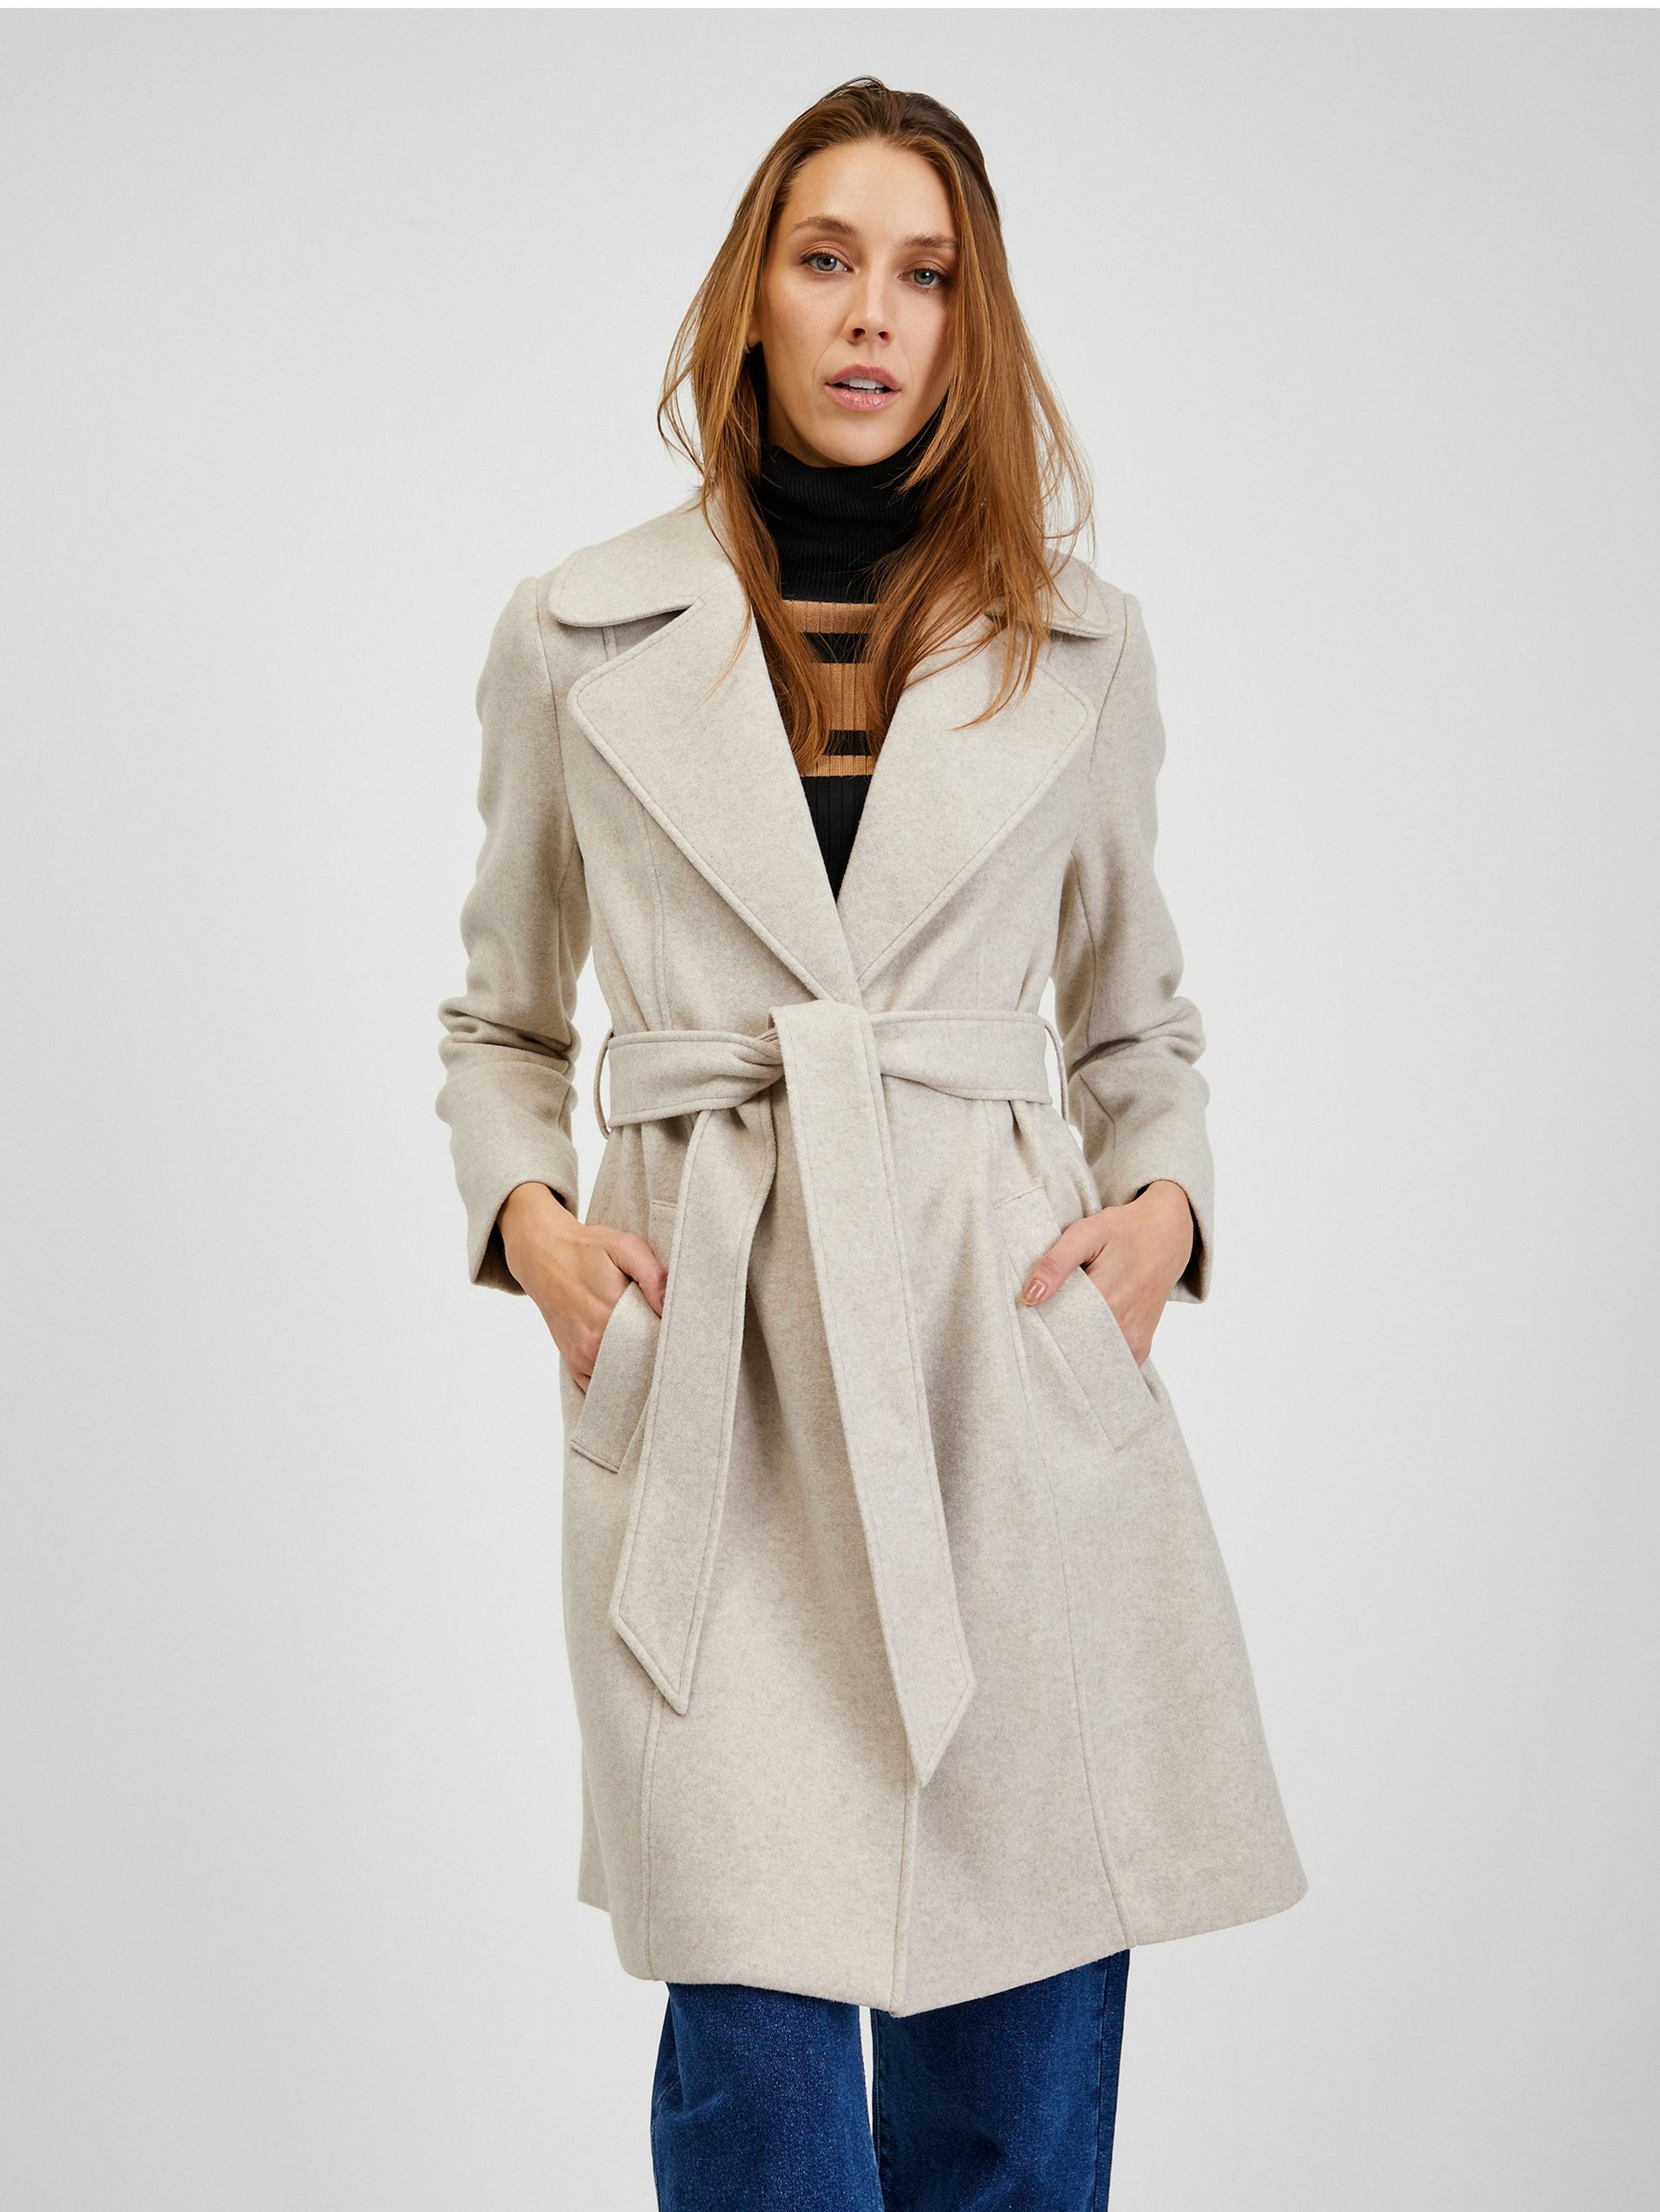 Béžový dámsky zimný kabát s opaskom ORSAY